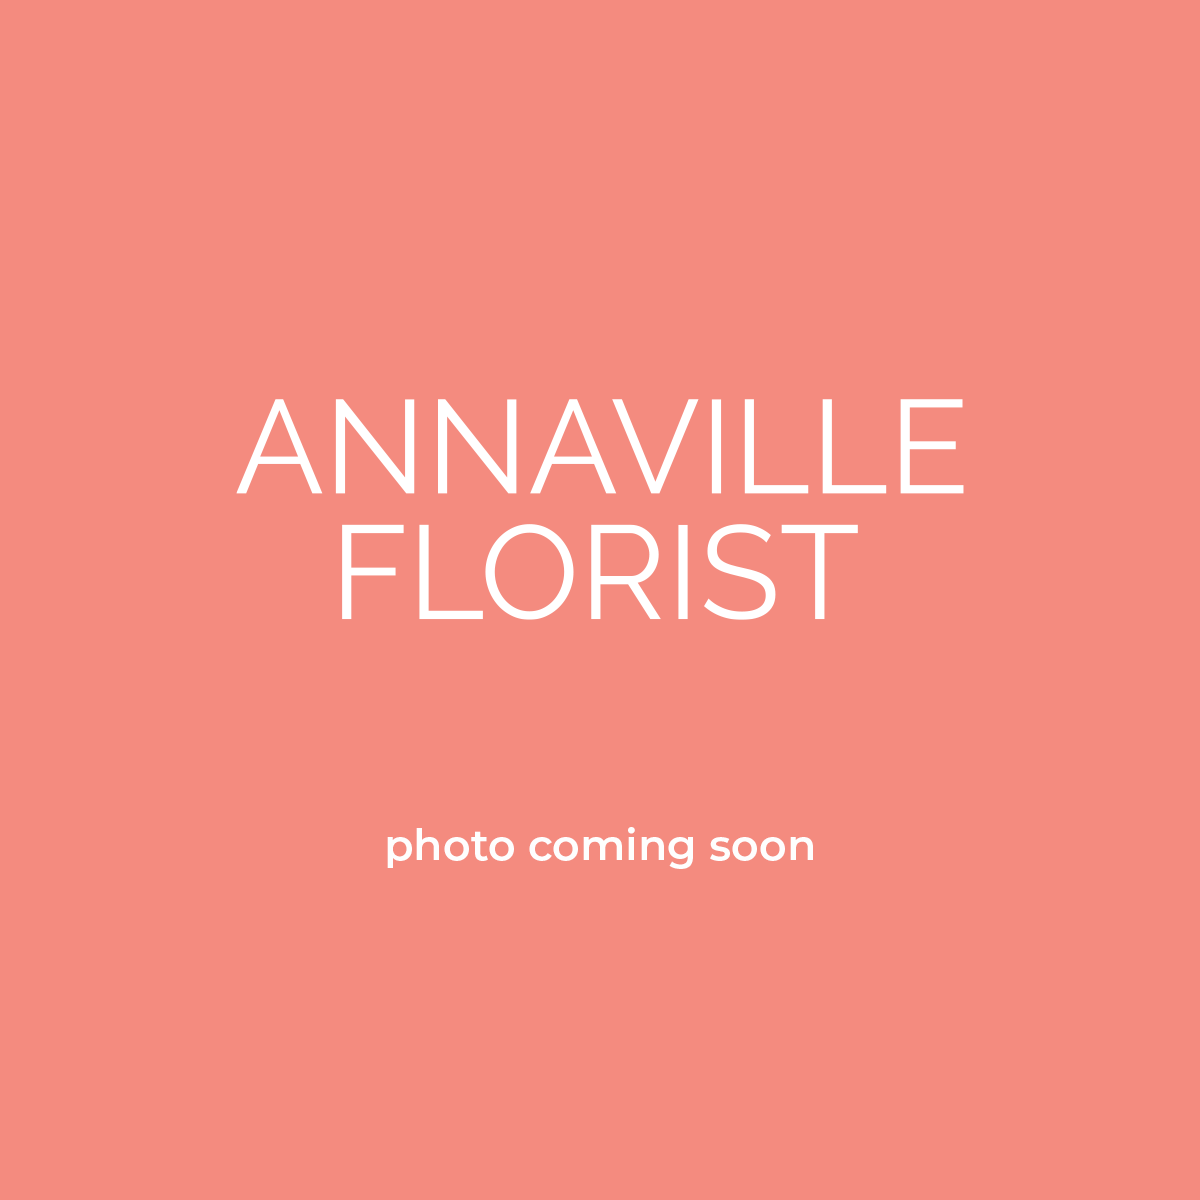 annaville florist, photo coming soon